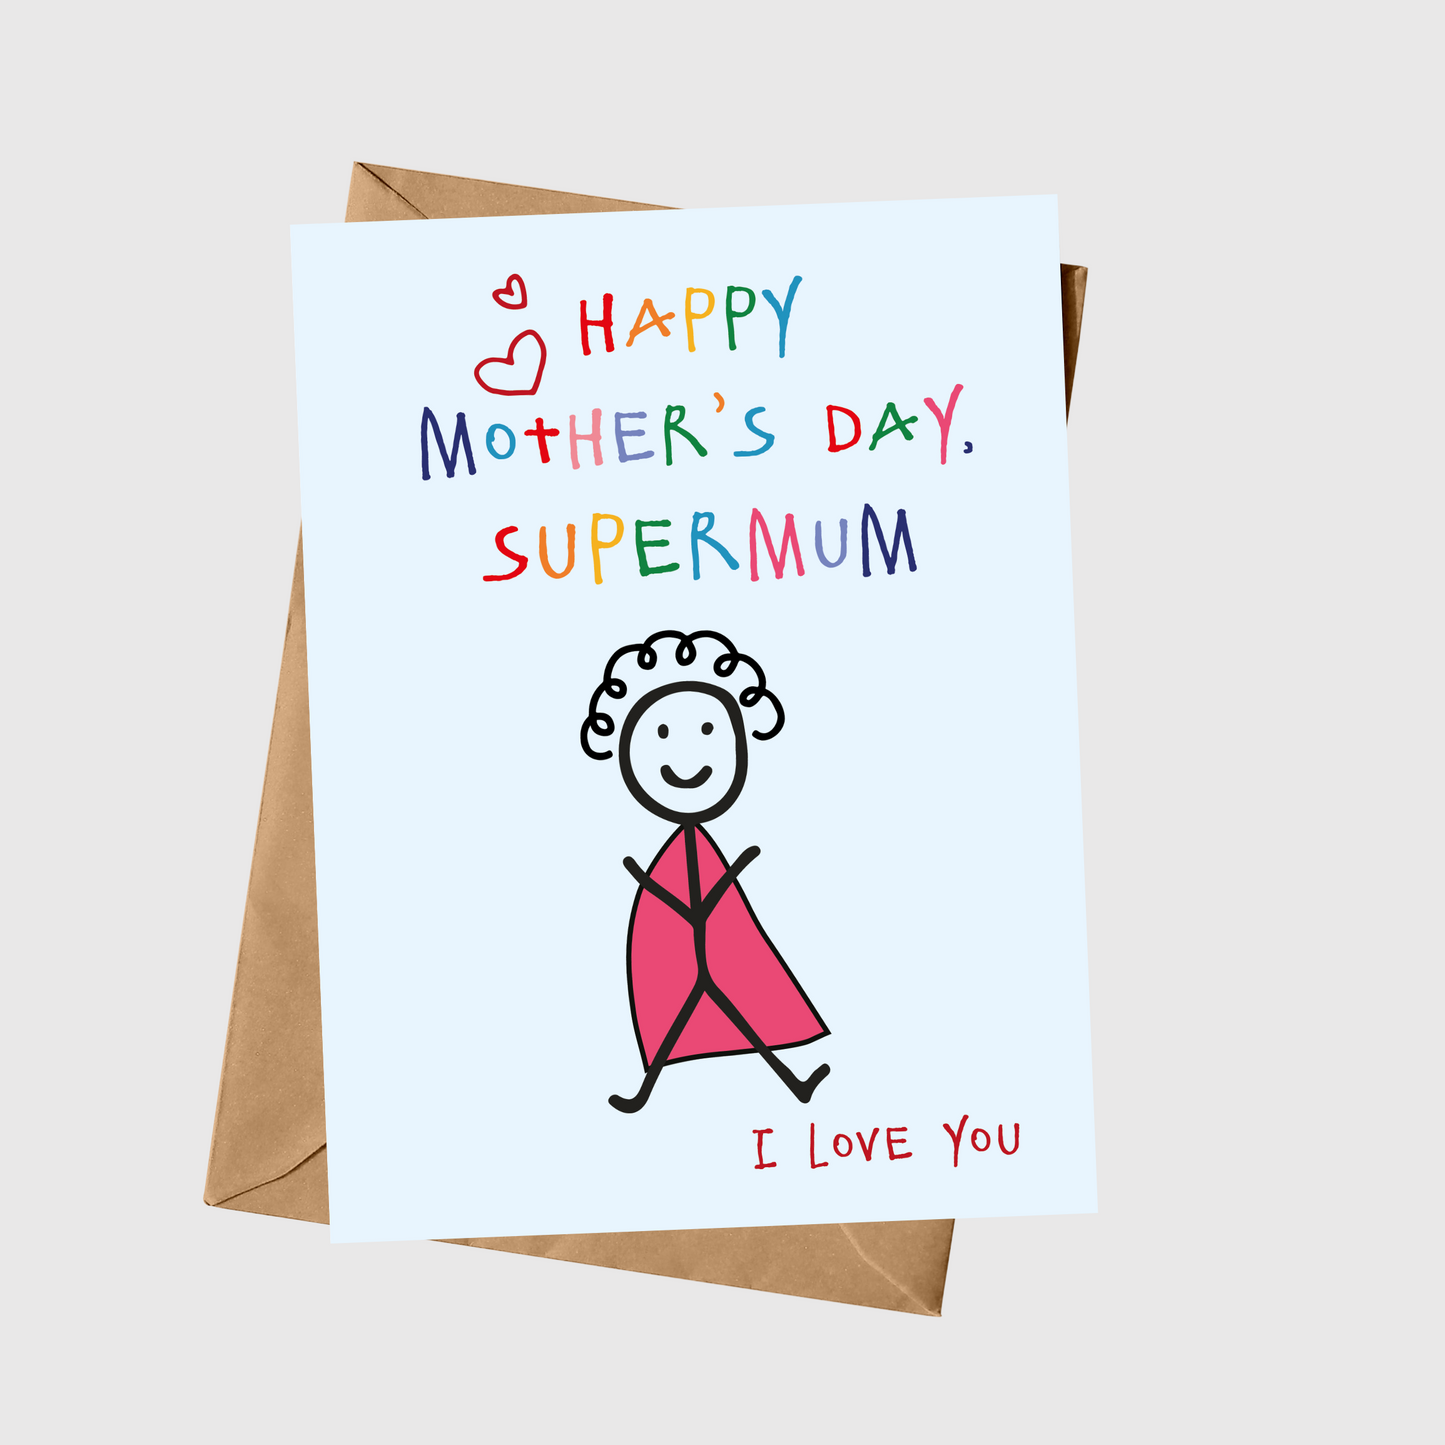 Happy Mother's Day Super-mum